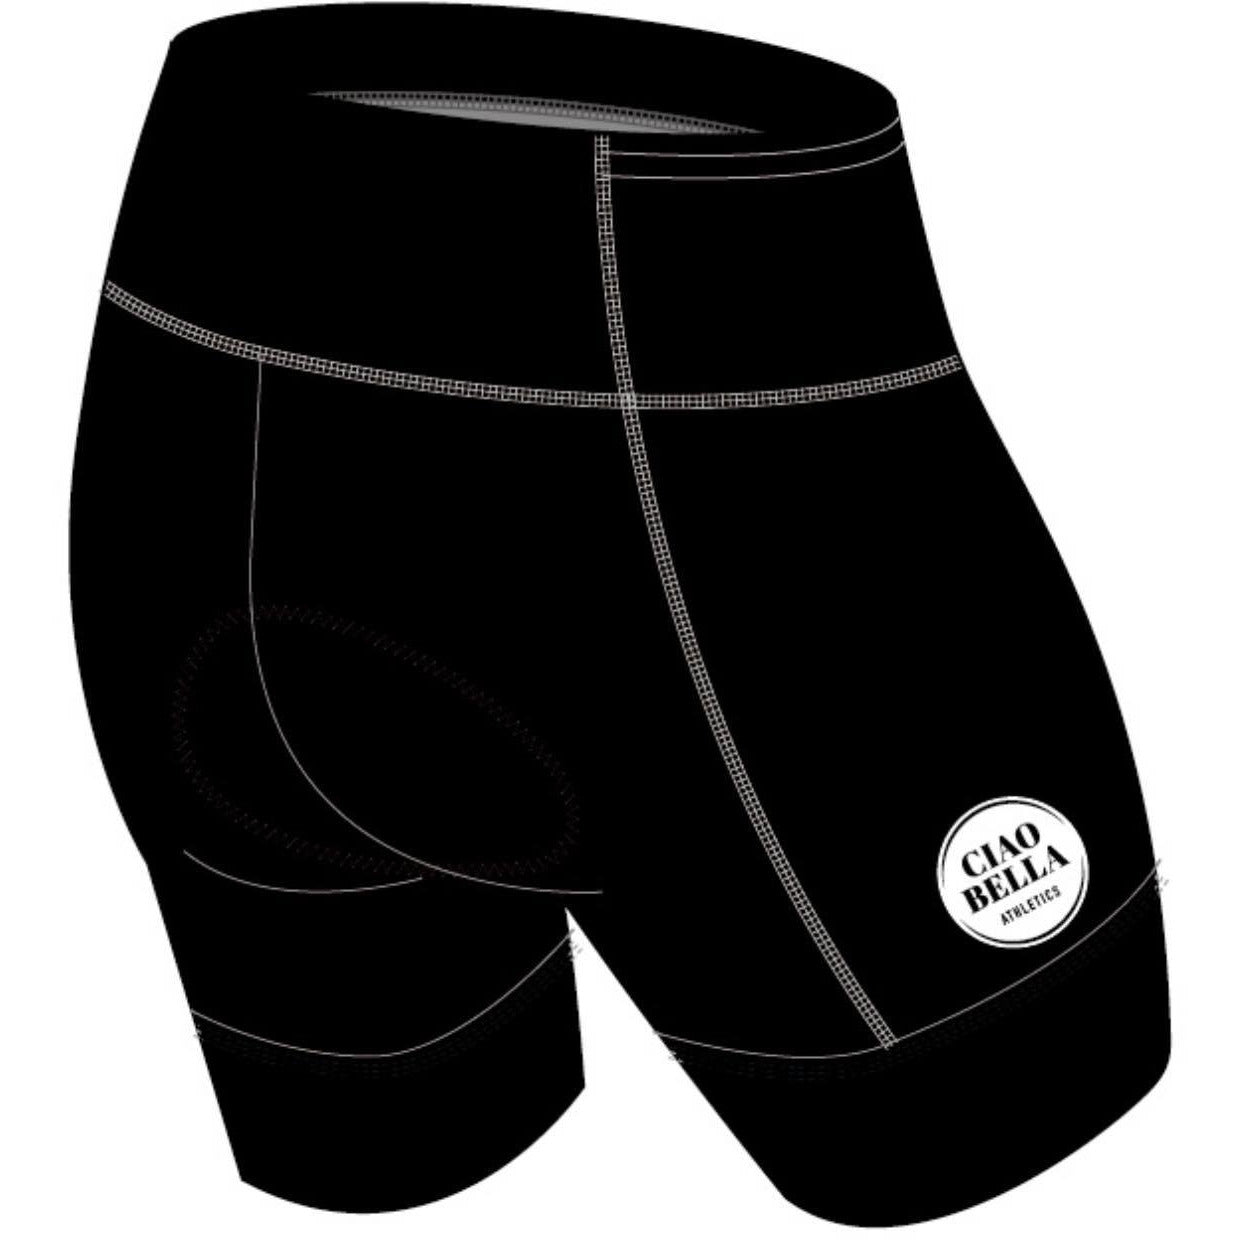 Triathlon Shorts - Black Pearl Design